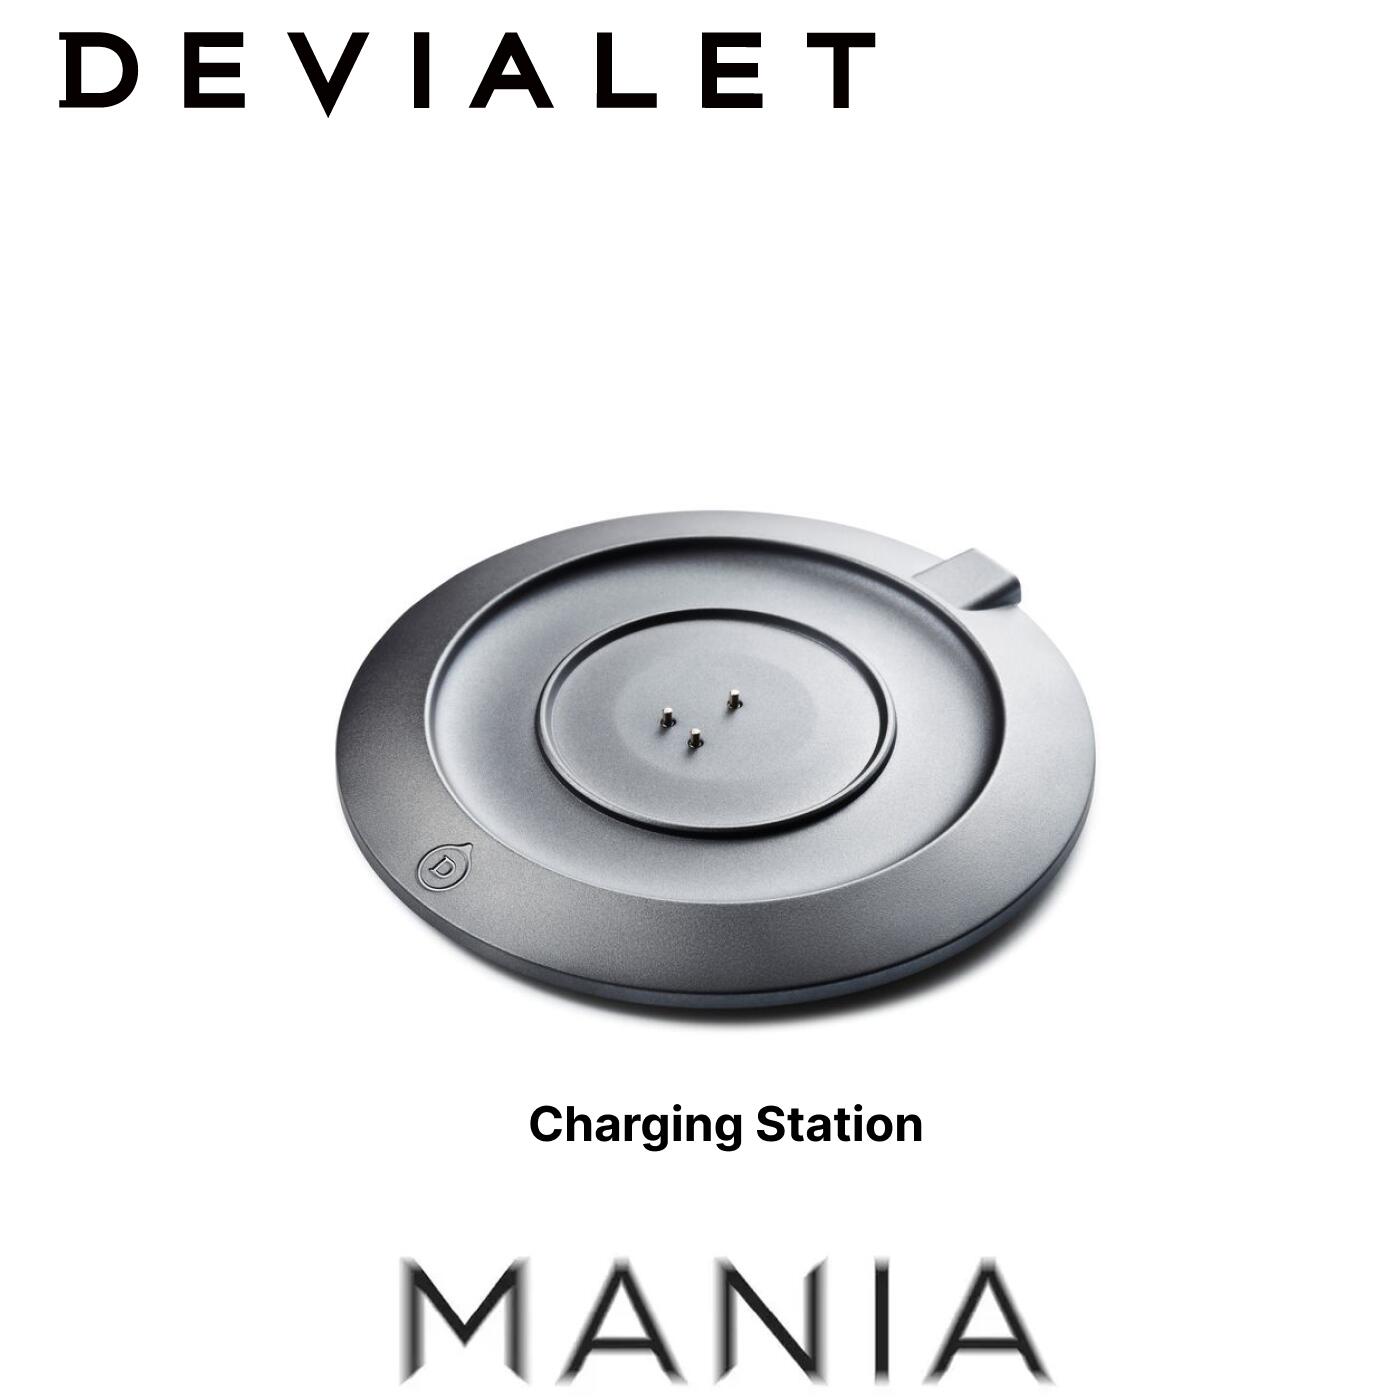 DEVIALET MANIA CHARGING STATION デビアレ マニア 専用充電台国内正規代理店